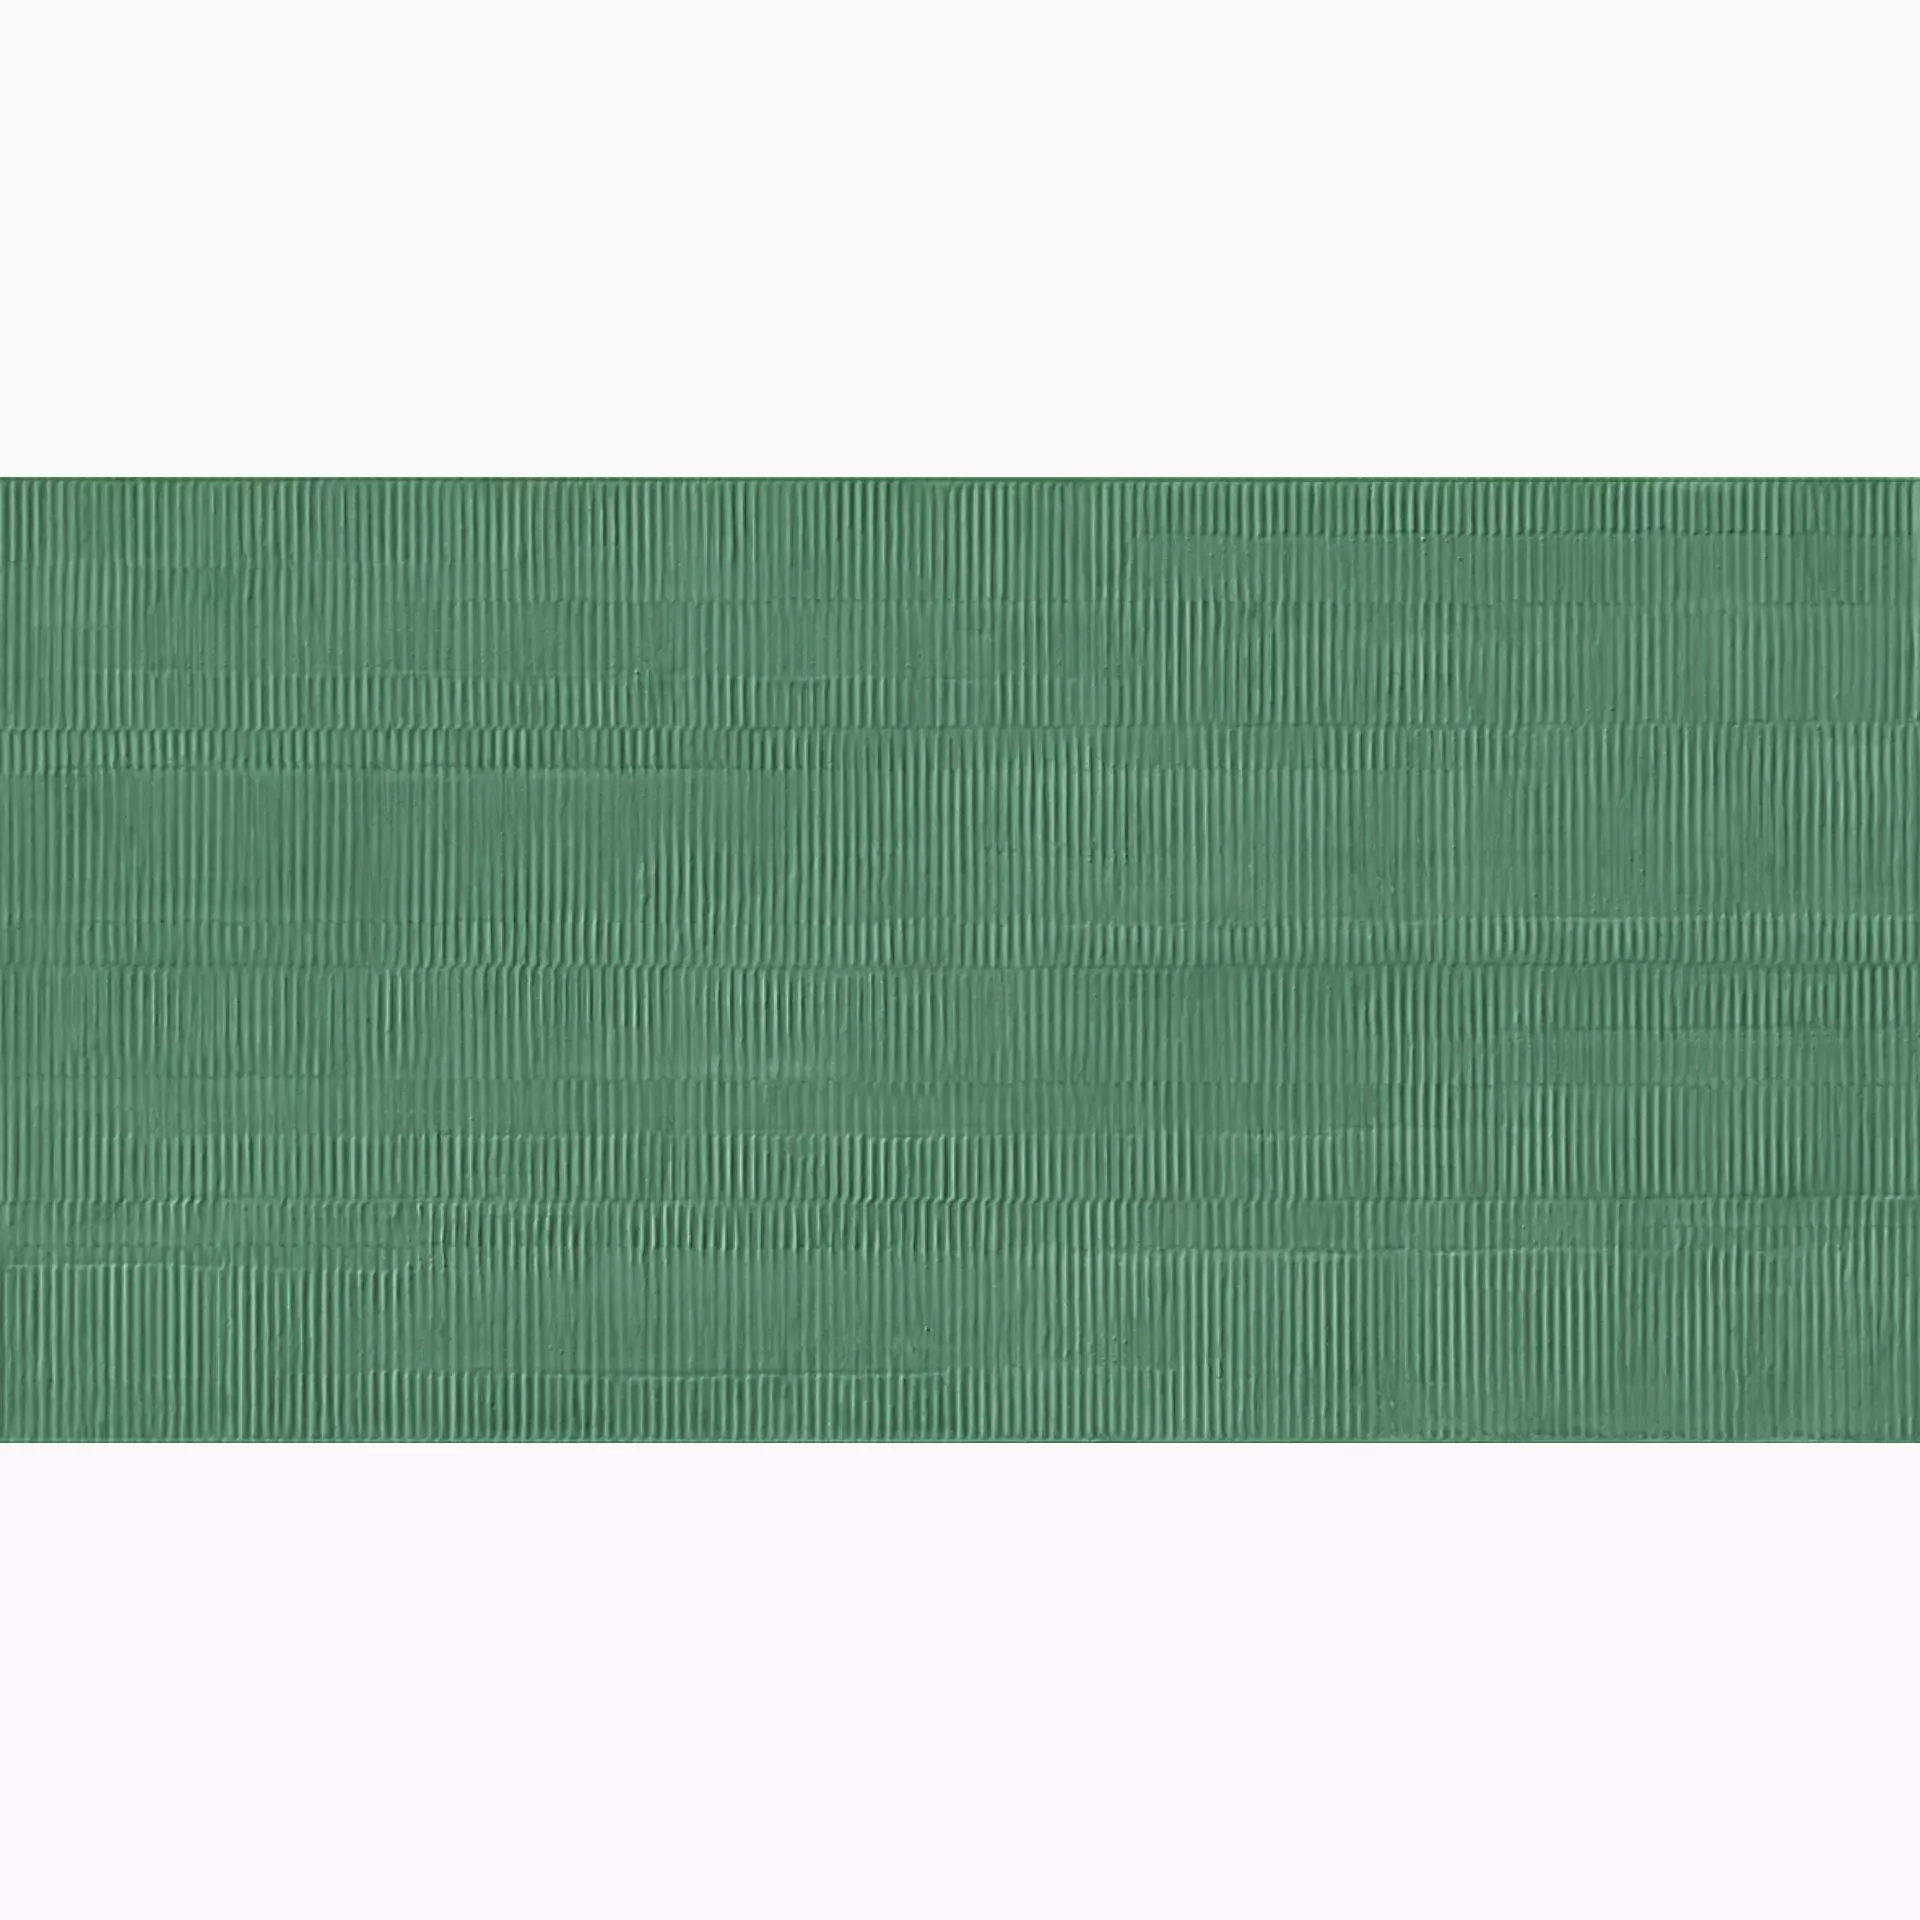 Ergon Pigmento Verde Salvia Silktech Decor Cardboard ELSL 60x120cm rectified 9,5mm